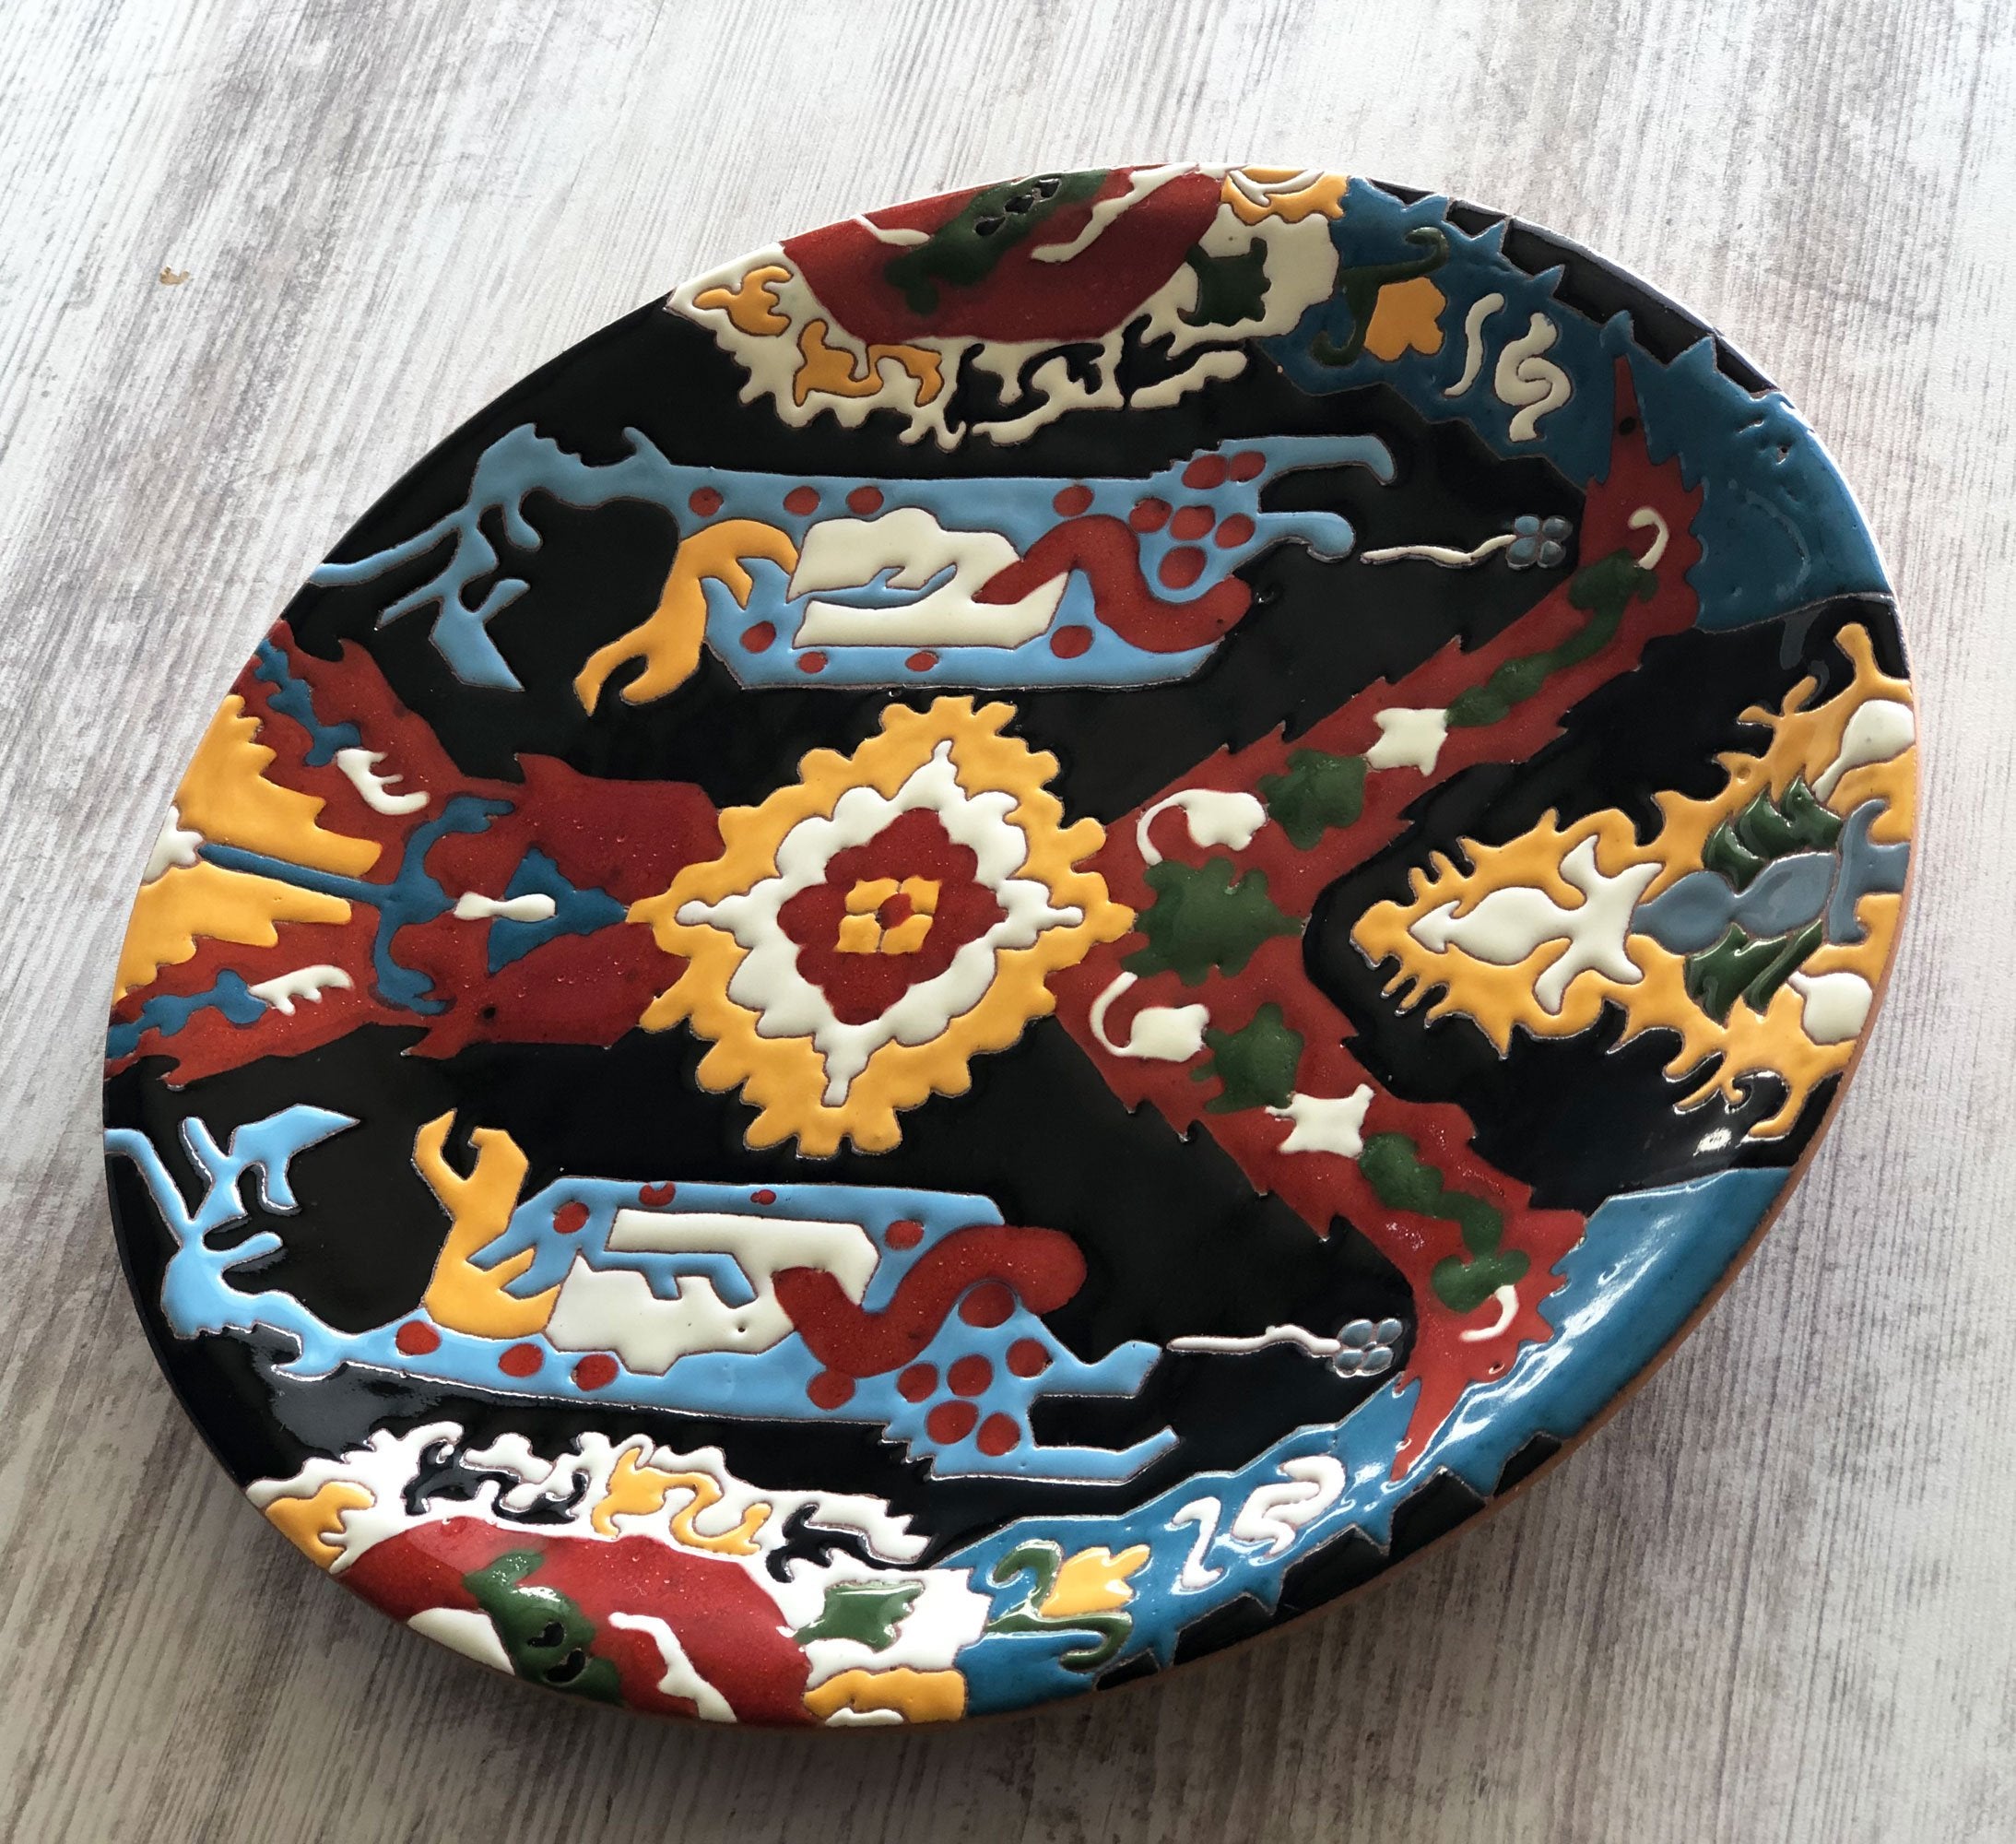 Mane Tiles Ceramic Plate with Armenian Carpet Ornaments - Dragon